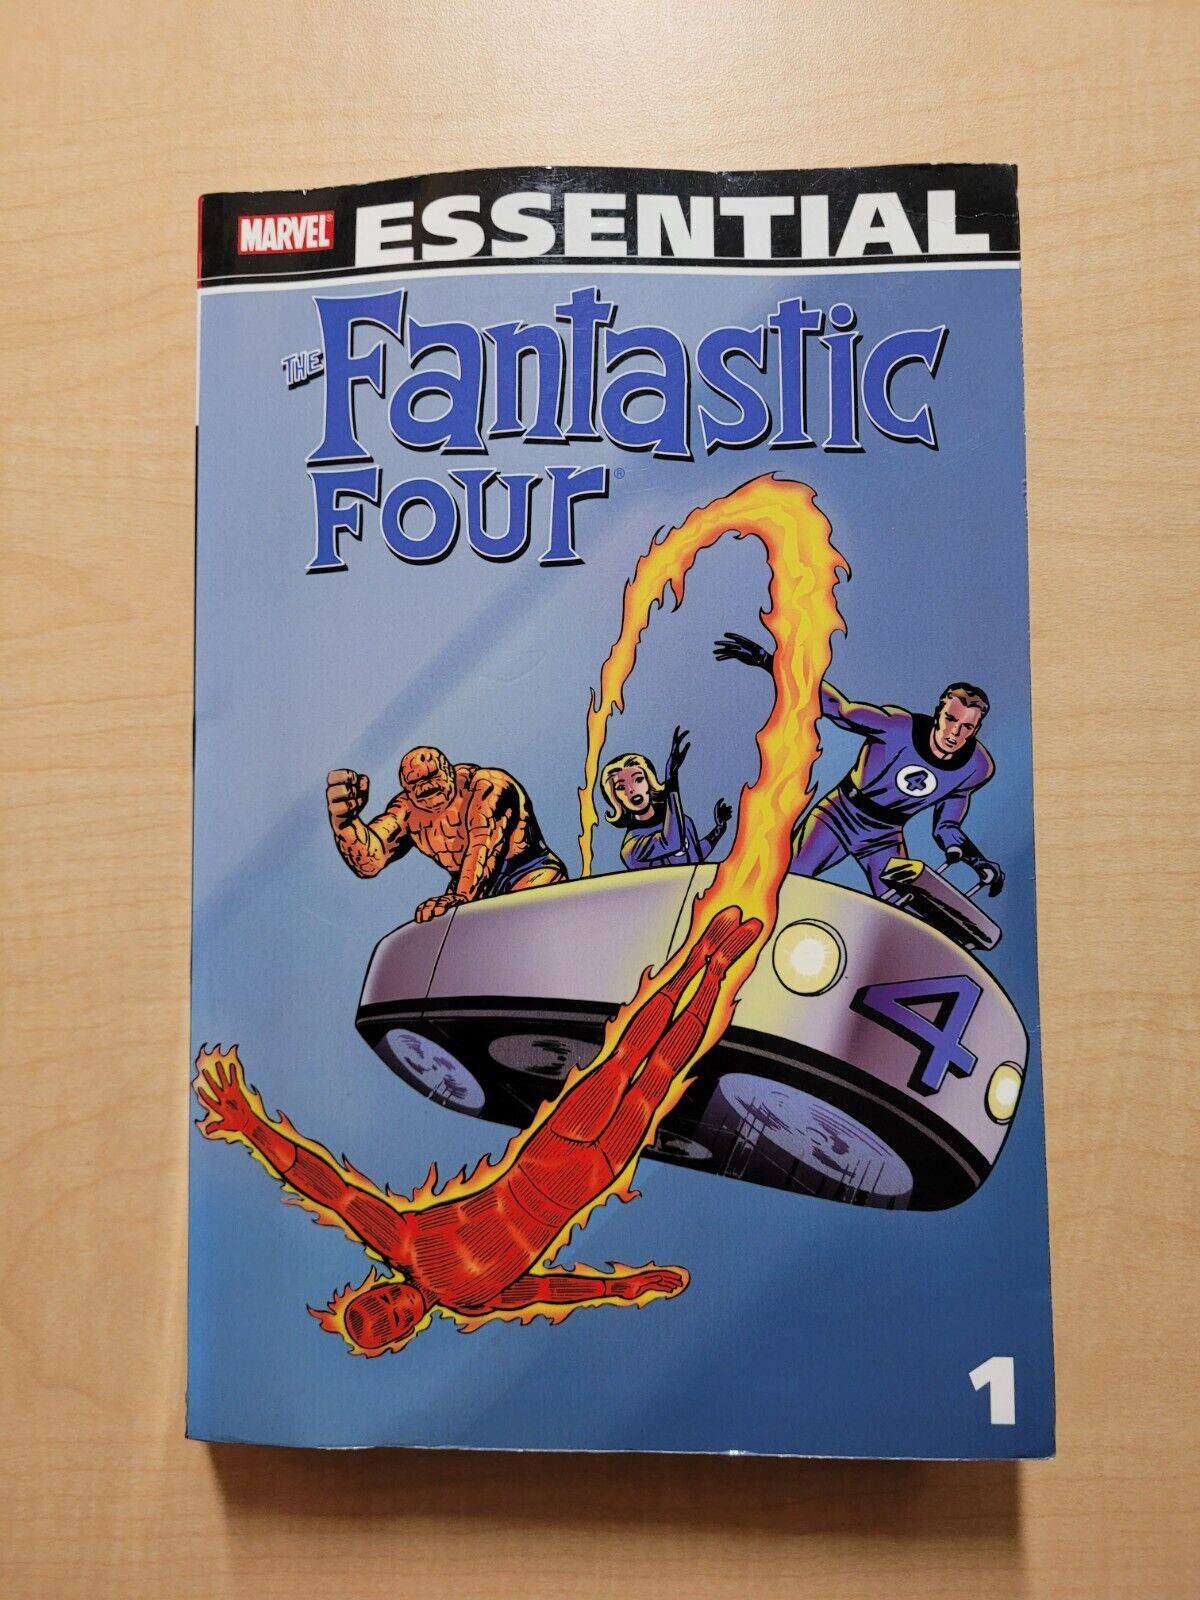 Essential The Fantastic Four Vol 1 Marvel Comics Paperback Book - Stan Lee